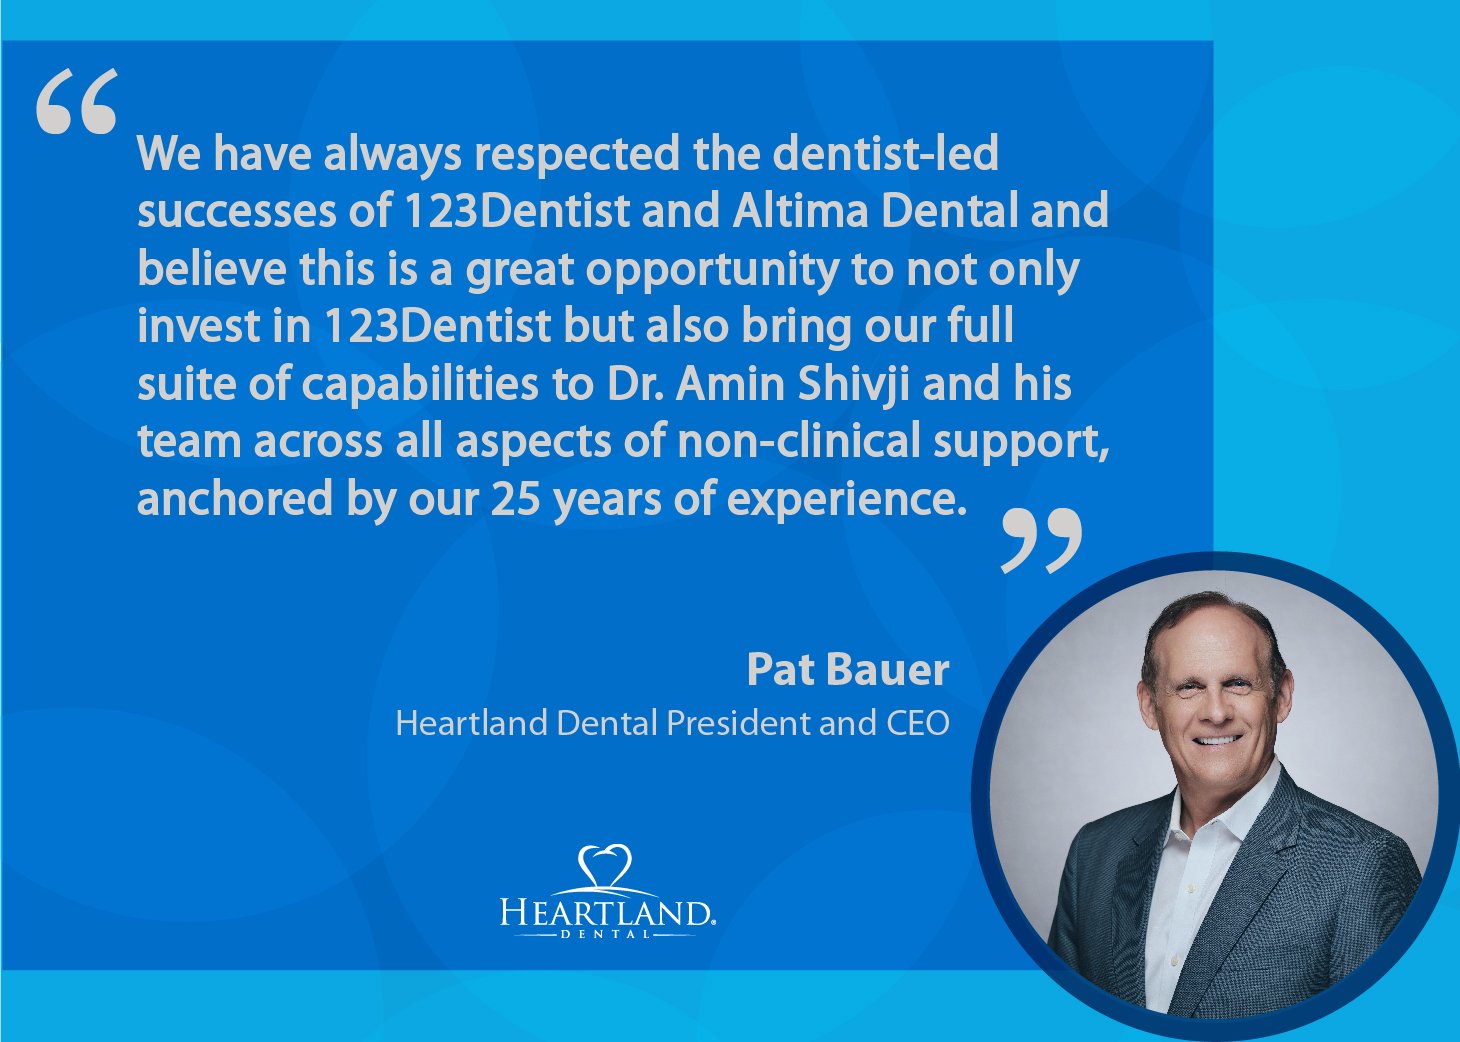 Heartland Dental Announces Strategic Investment in 123Dentist